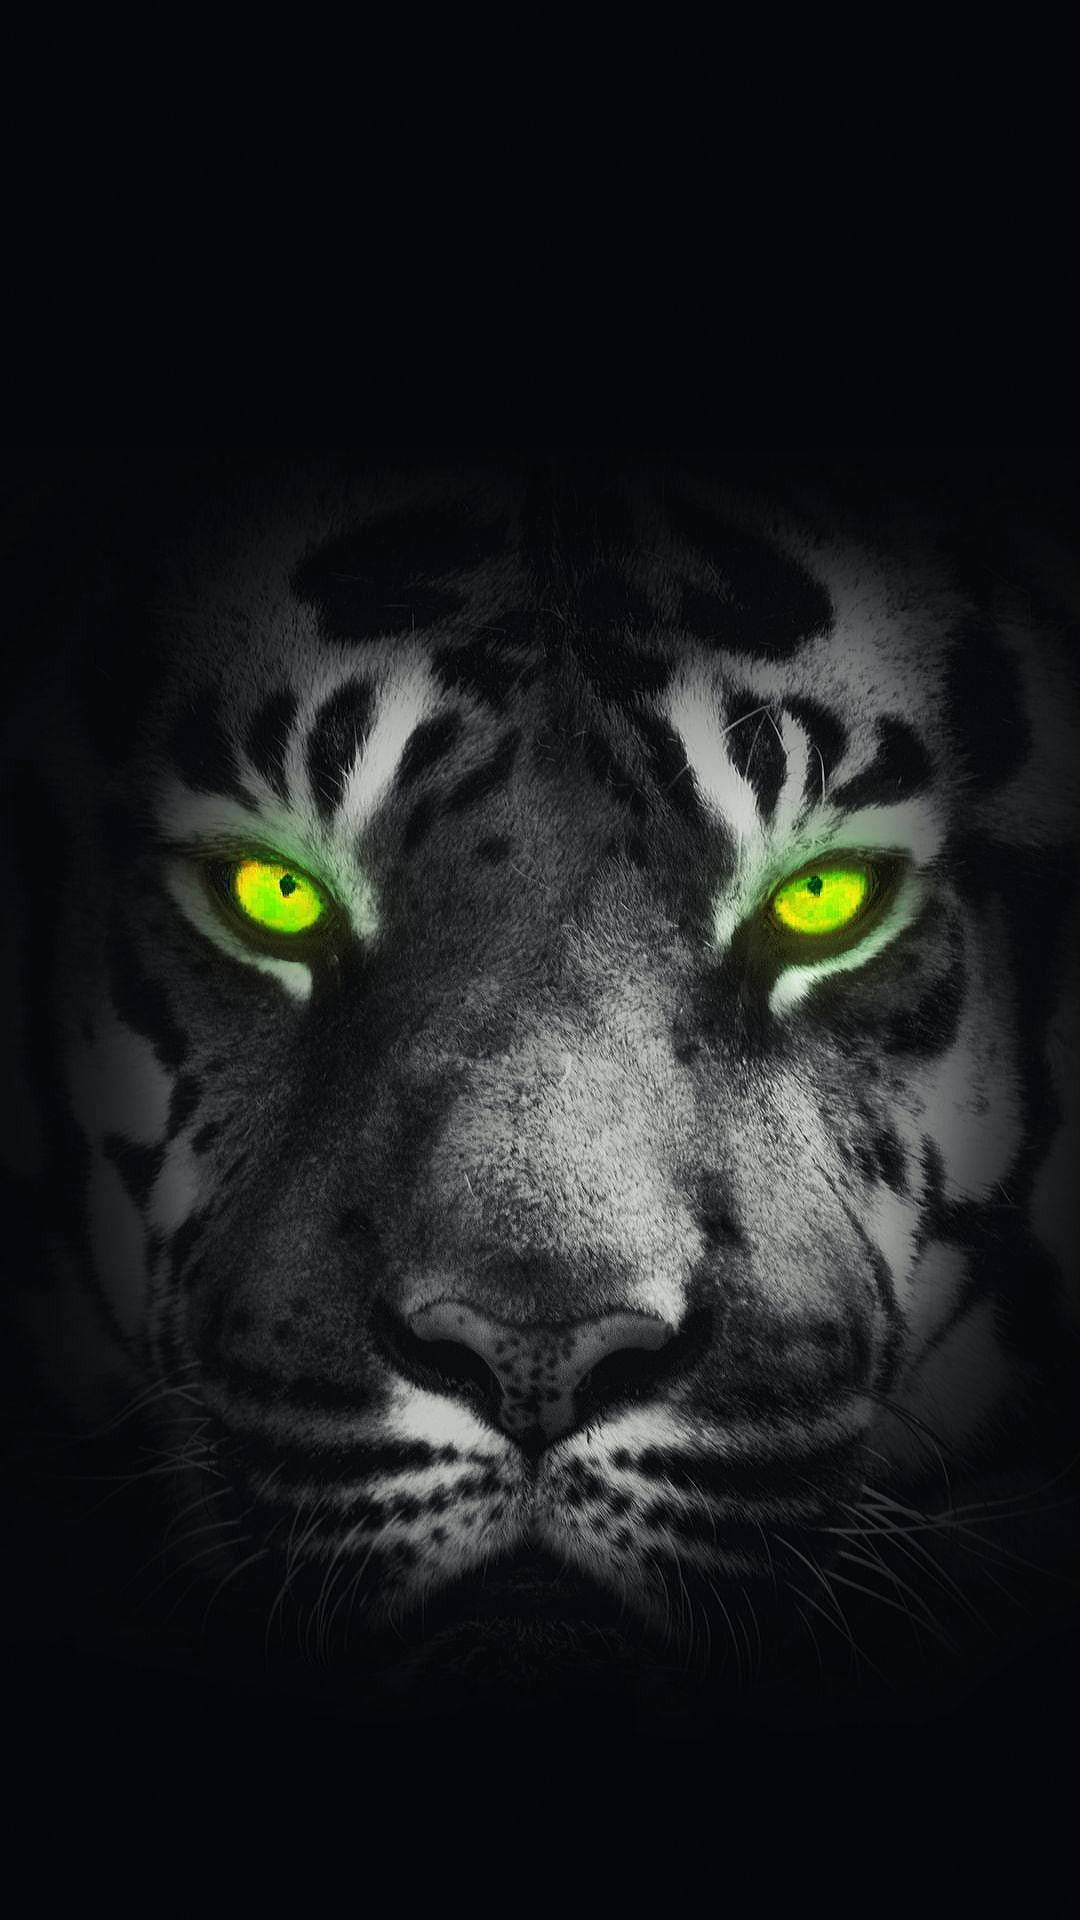 Glowing Green Eyes Of Black Tiger